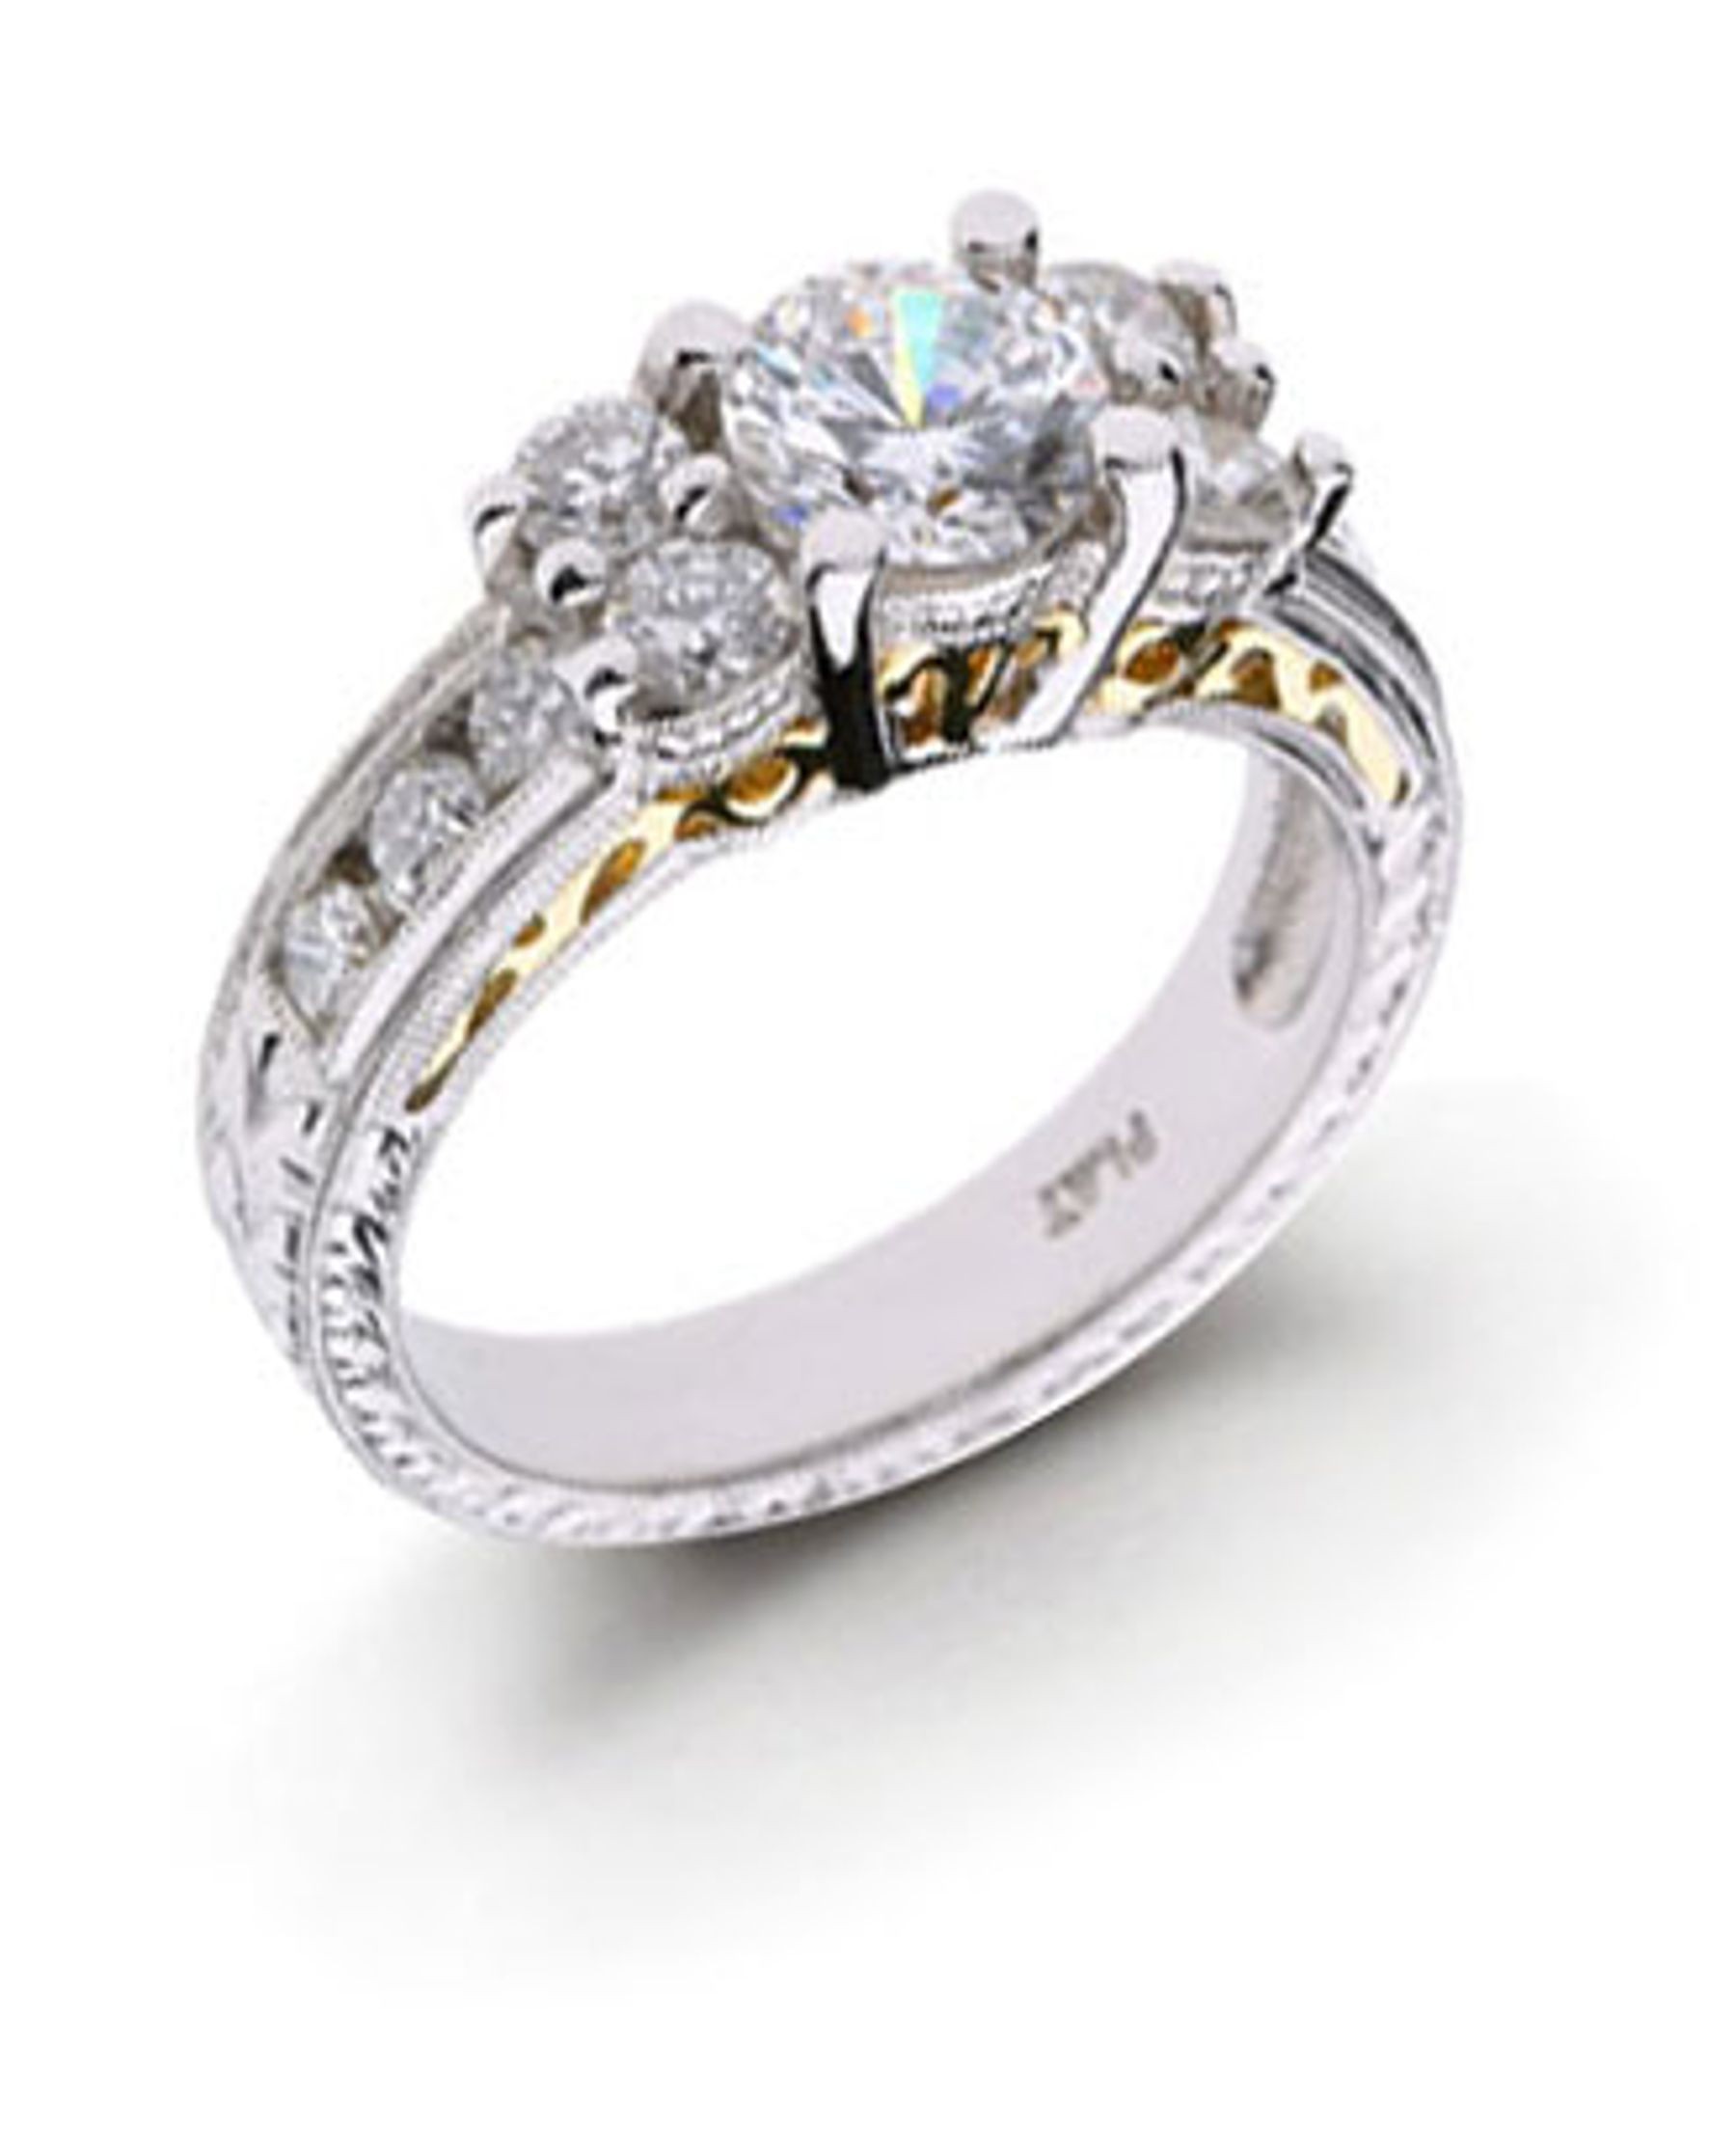 Platinum 14K White Gold Hand Engraved Filigree Vintage Antique Ring. View Setting Matching Diamond Wedding Bands